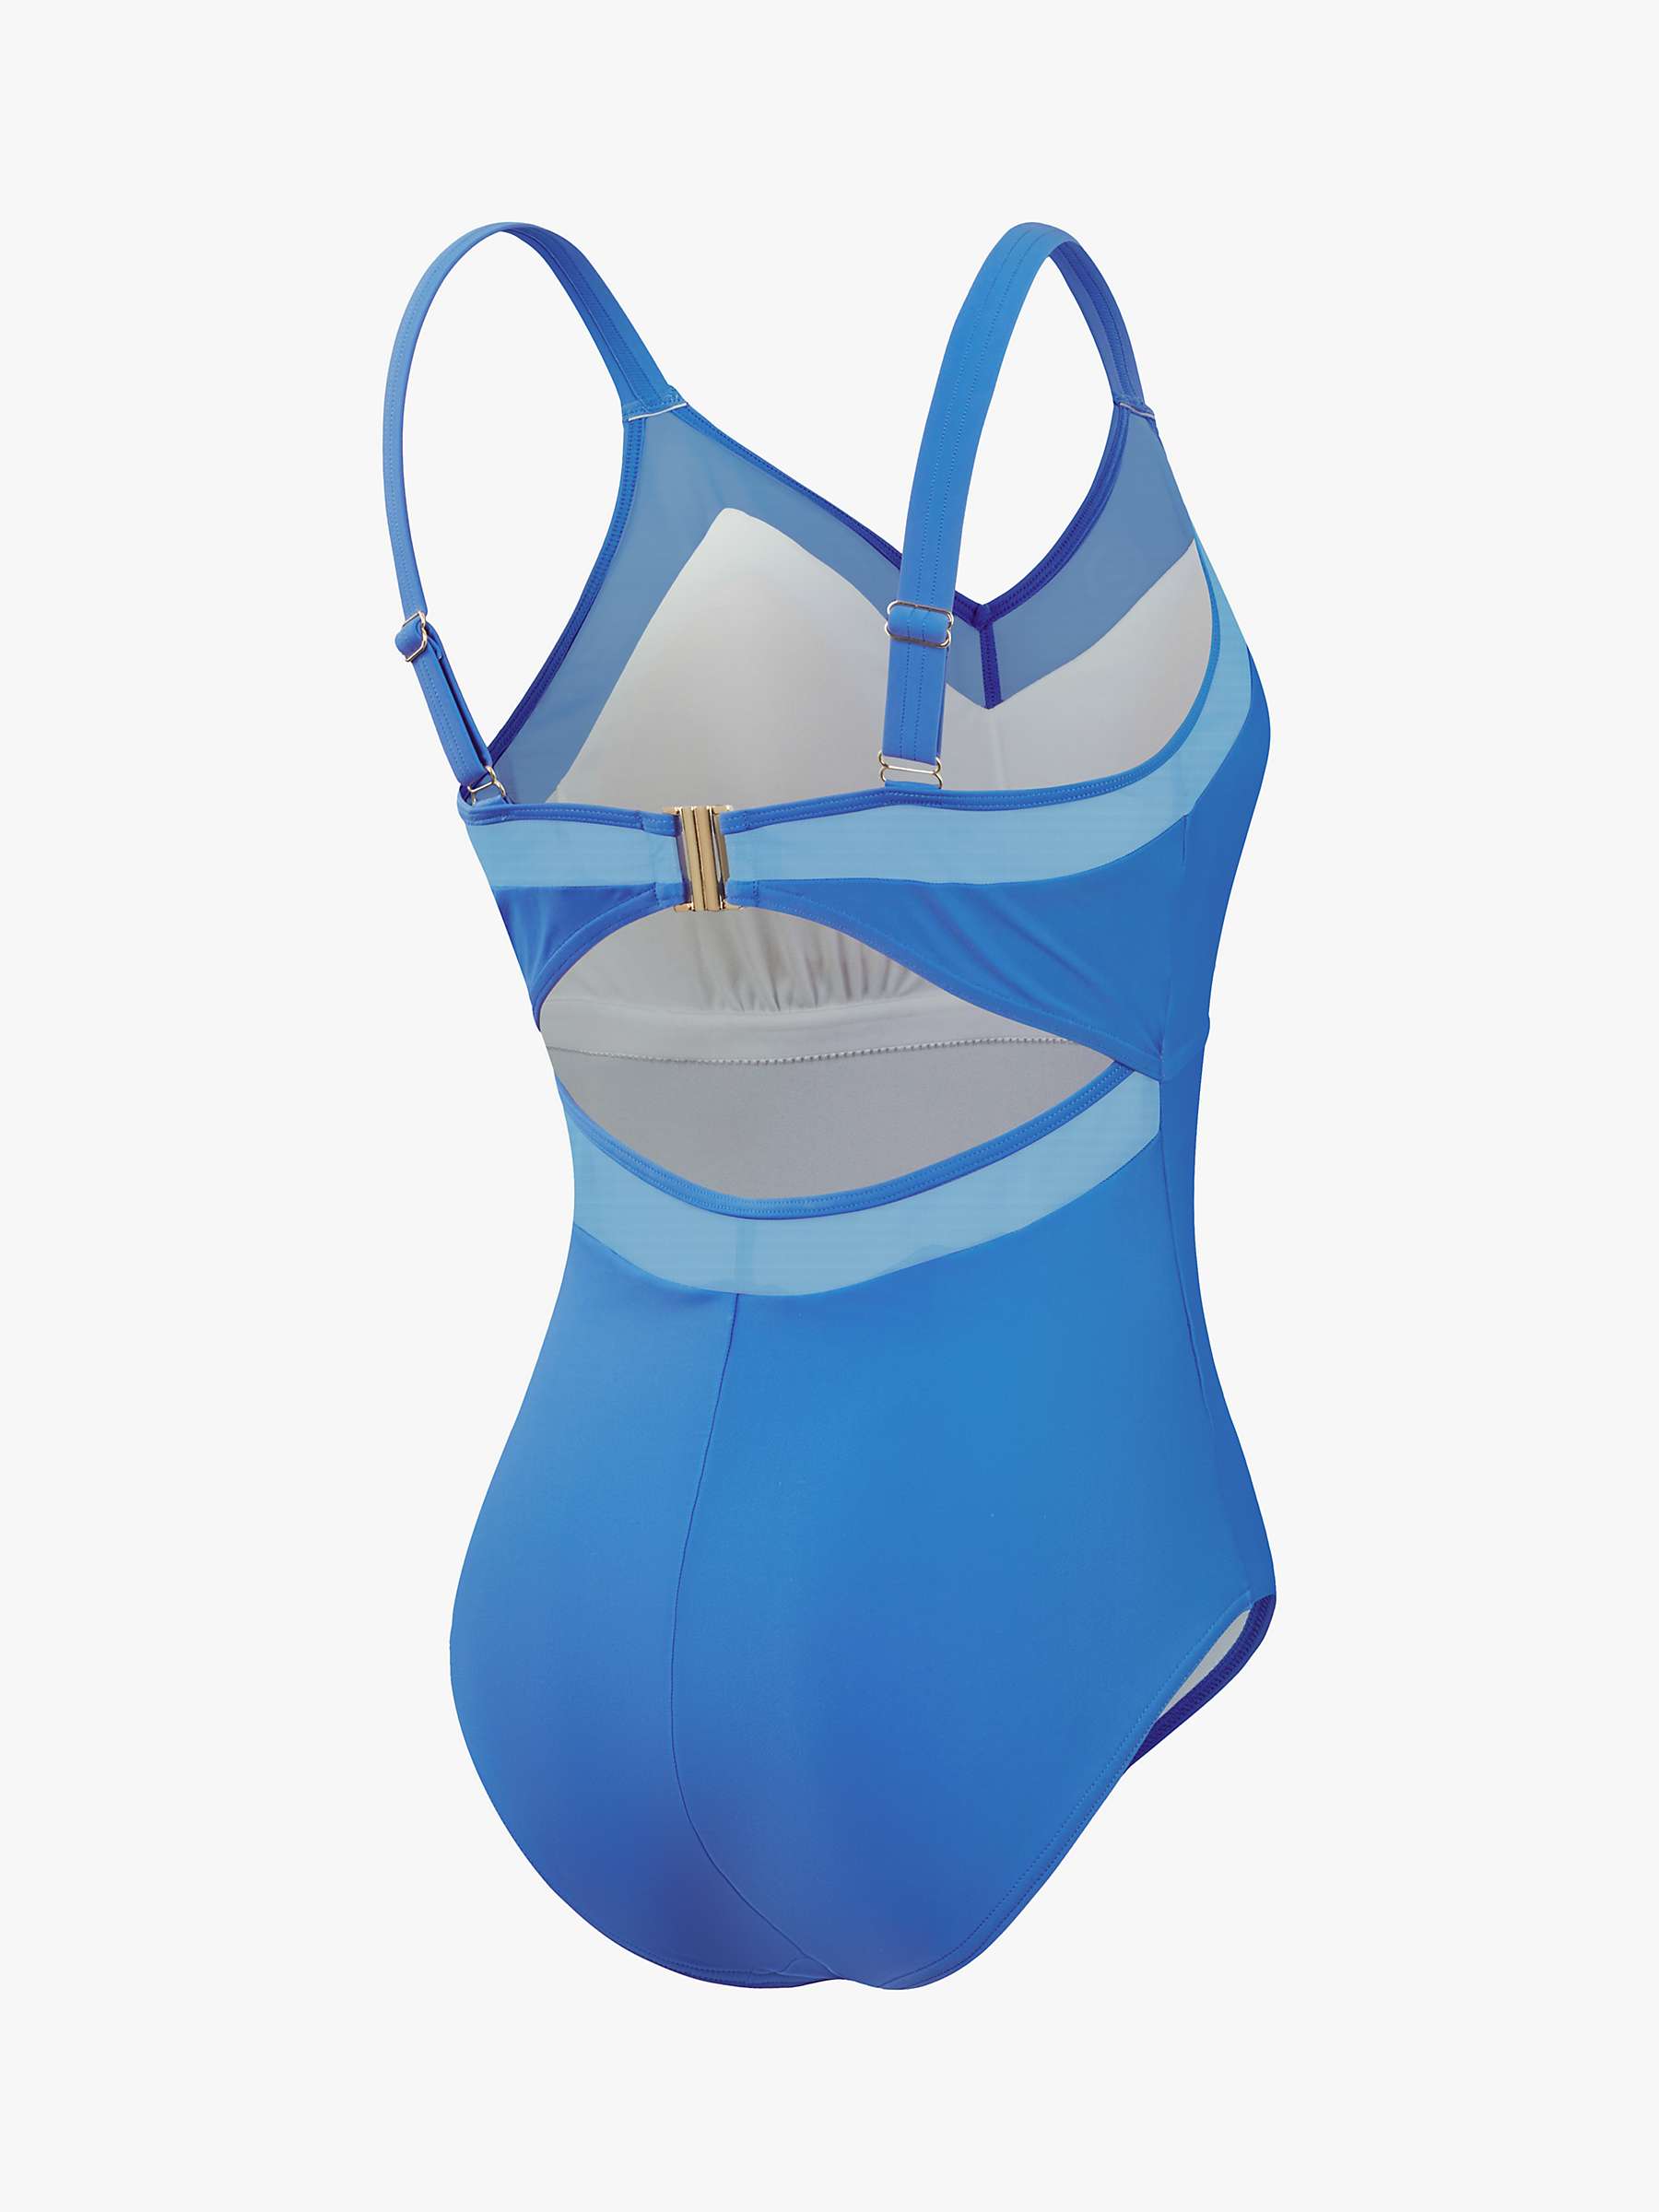 Buy Speedo Shaping Banduae Swimsuit, Sevres Blue Online at johnlewis.com